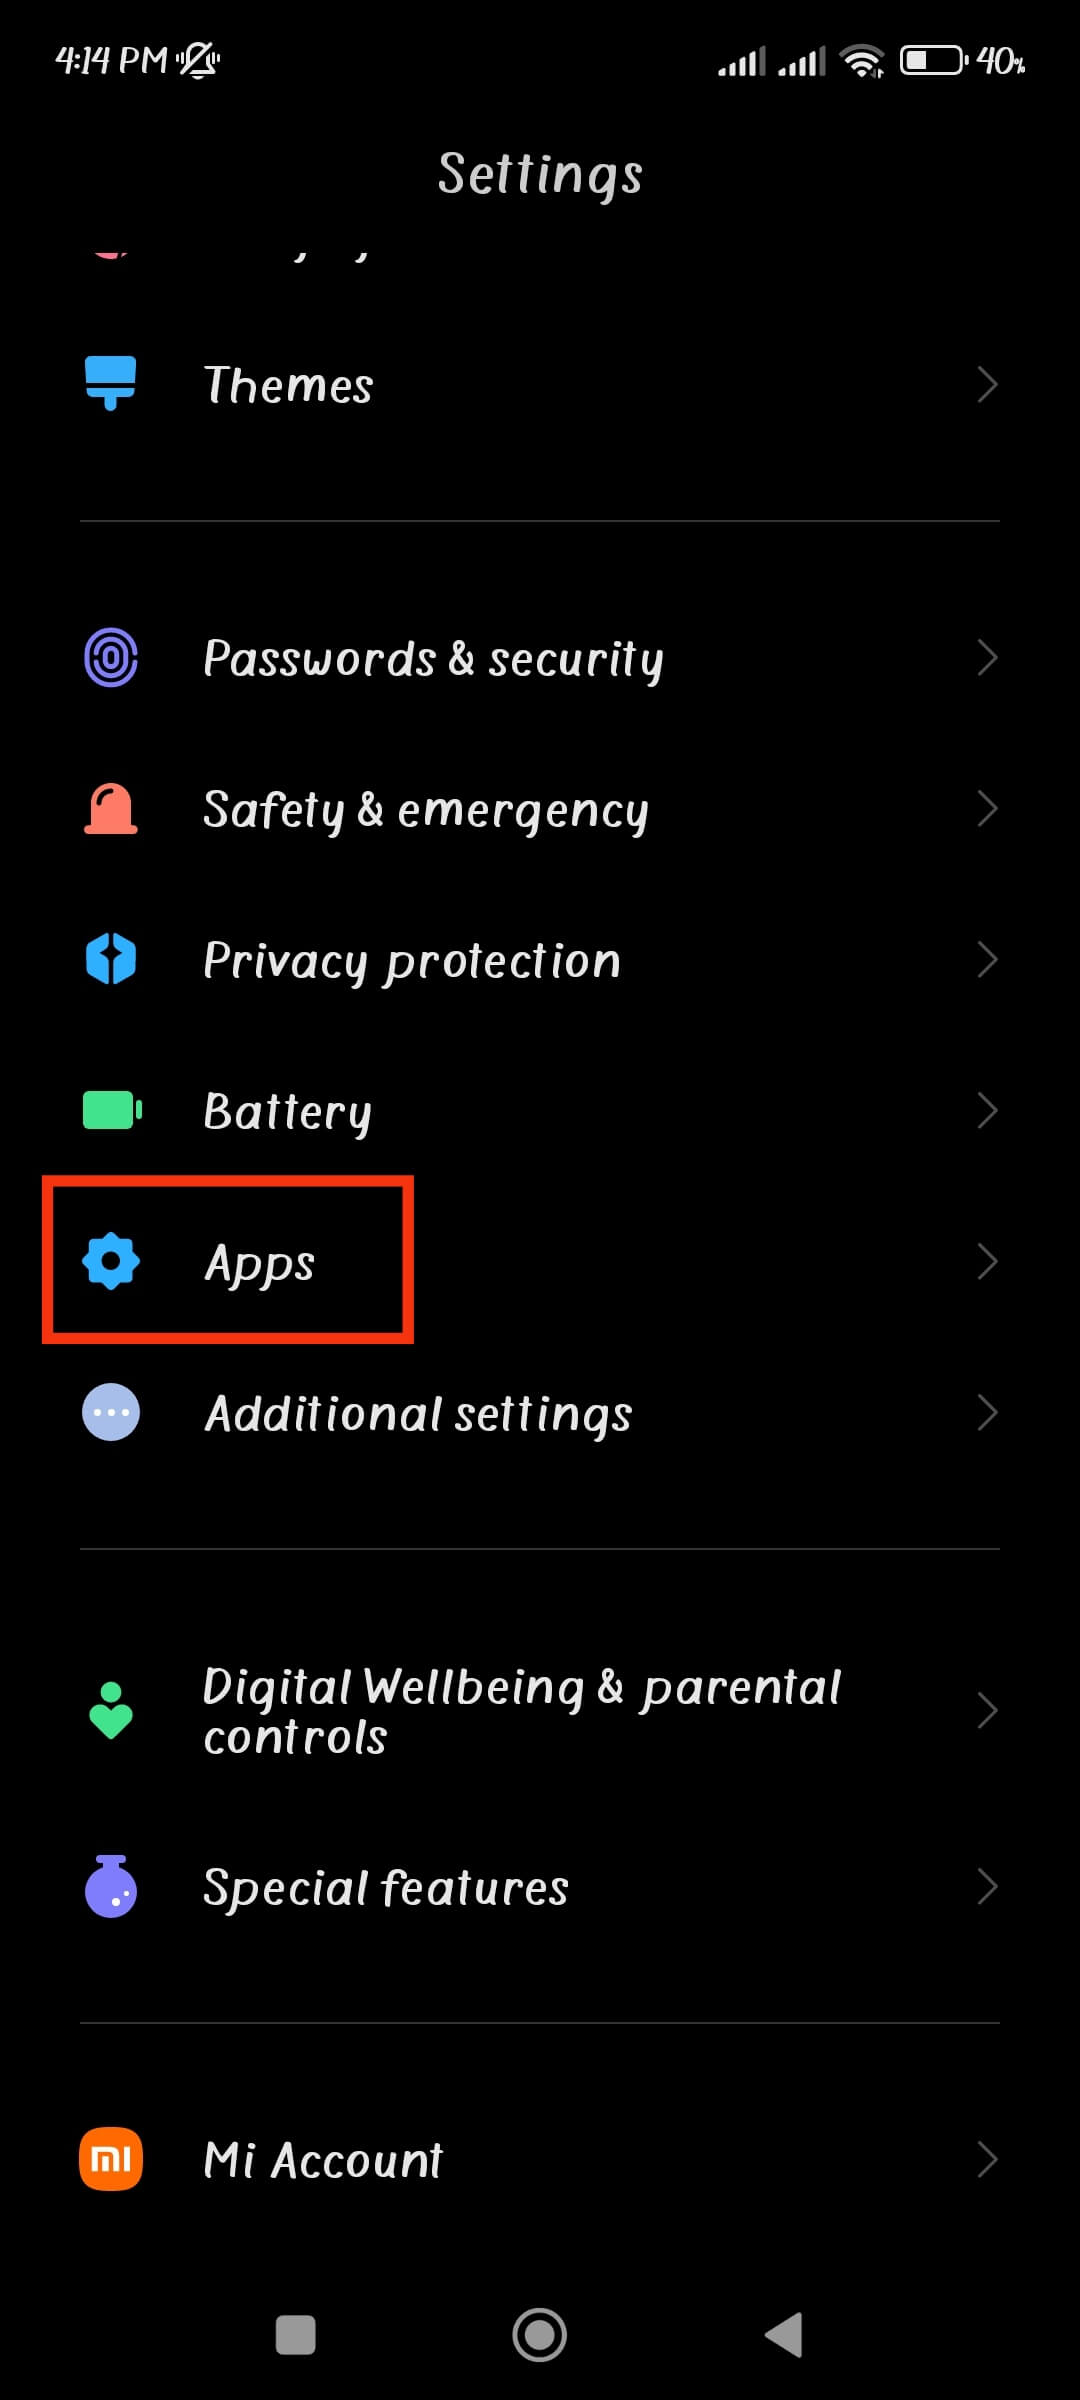 Apps settings